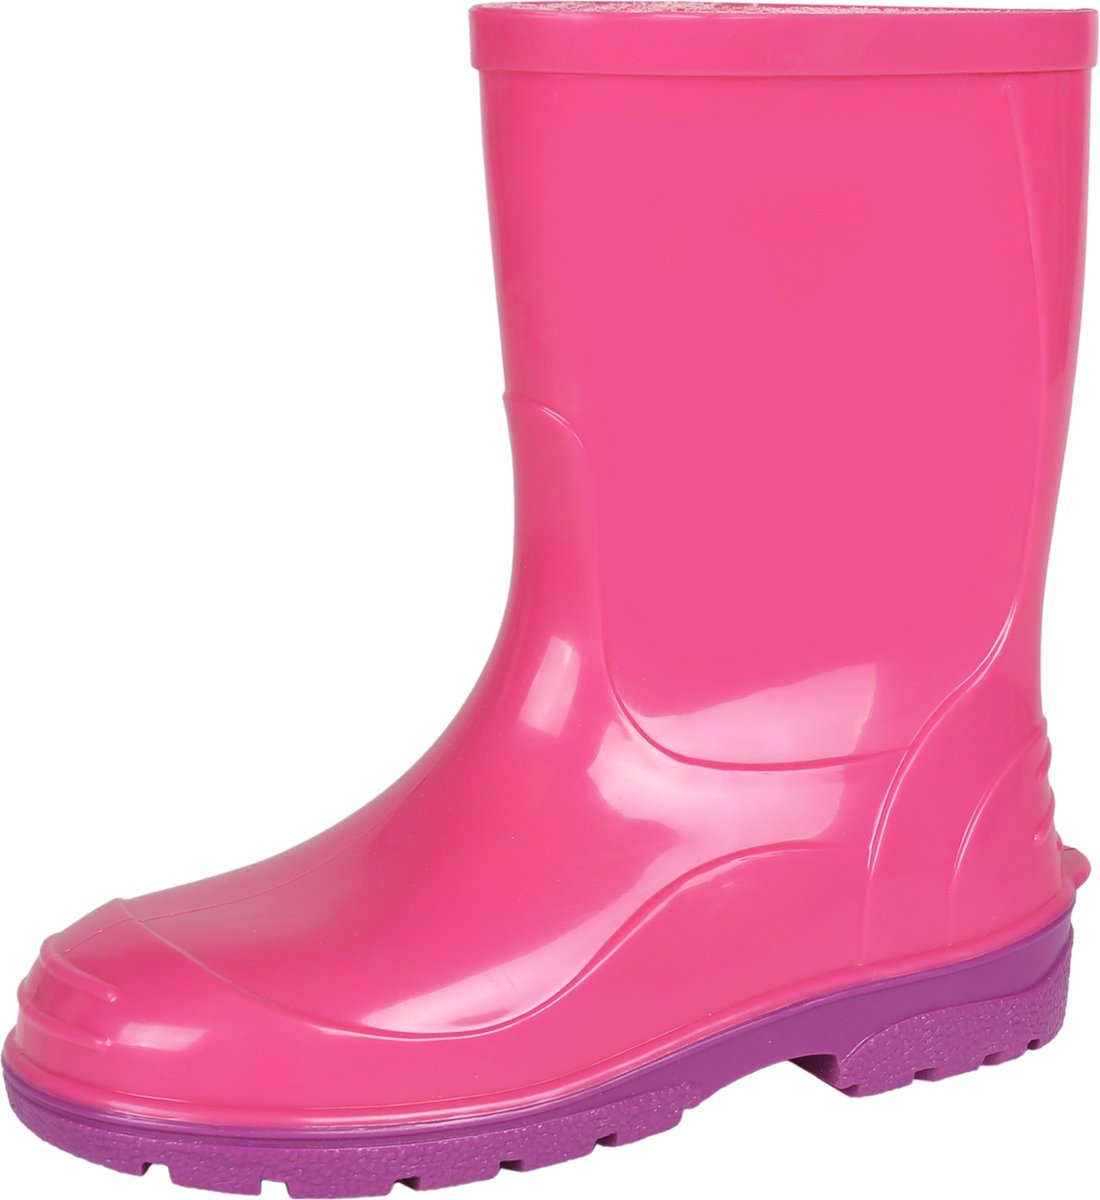 Roze laarzen met paarse zool - Ola LEMIGO / 29